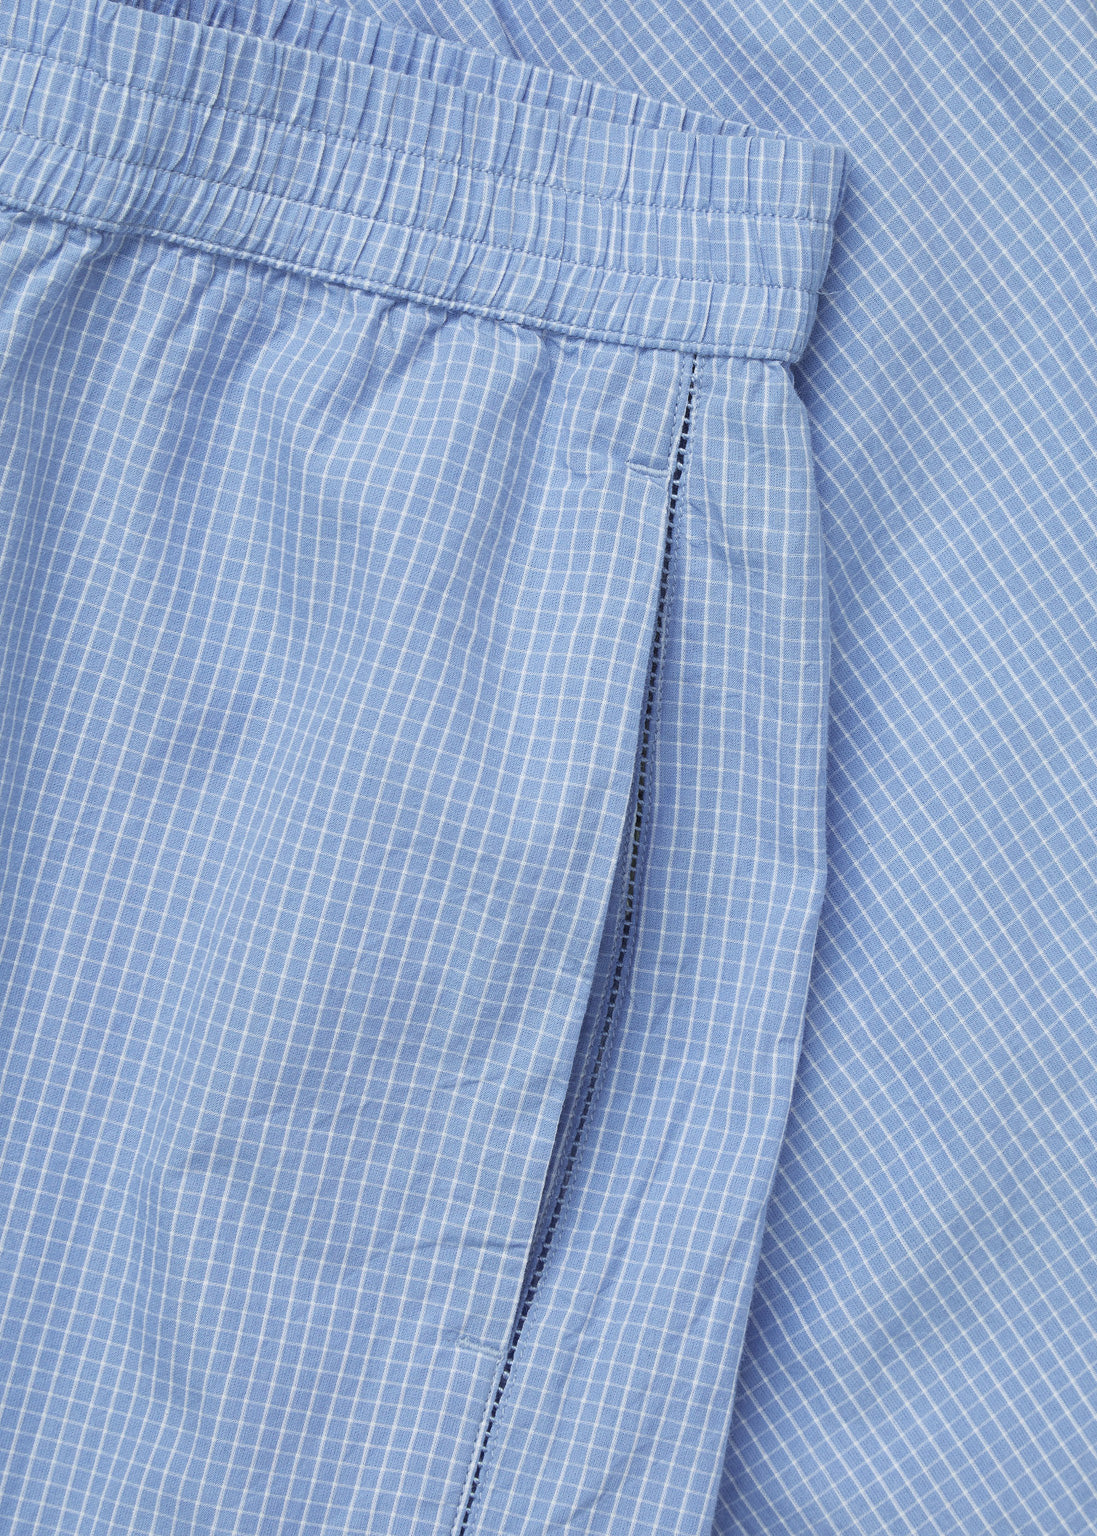 Casual shorts check | Mix Blue